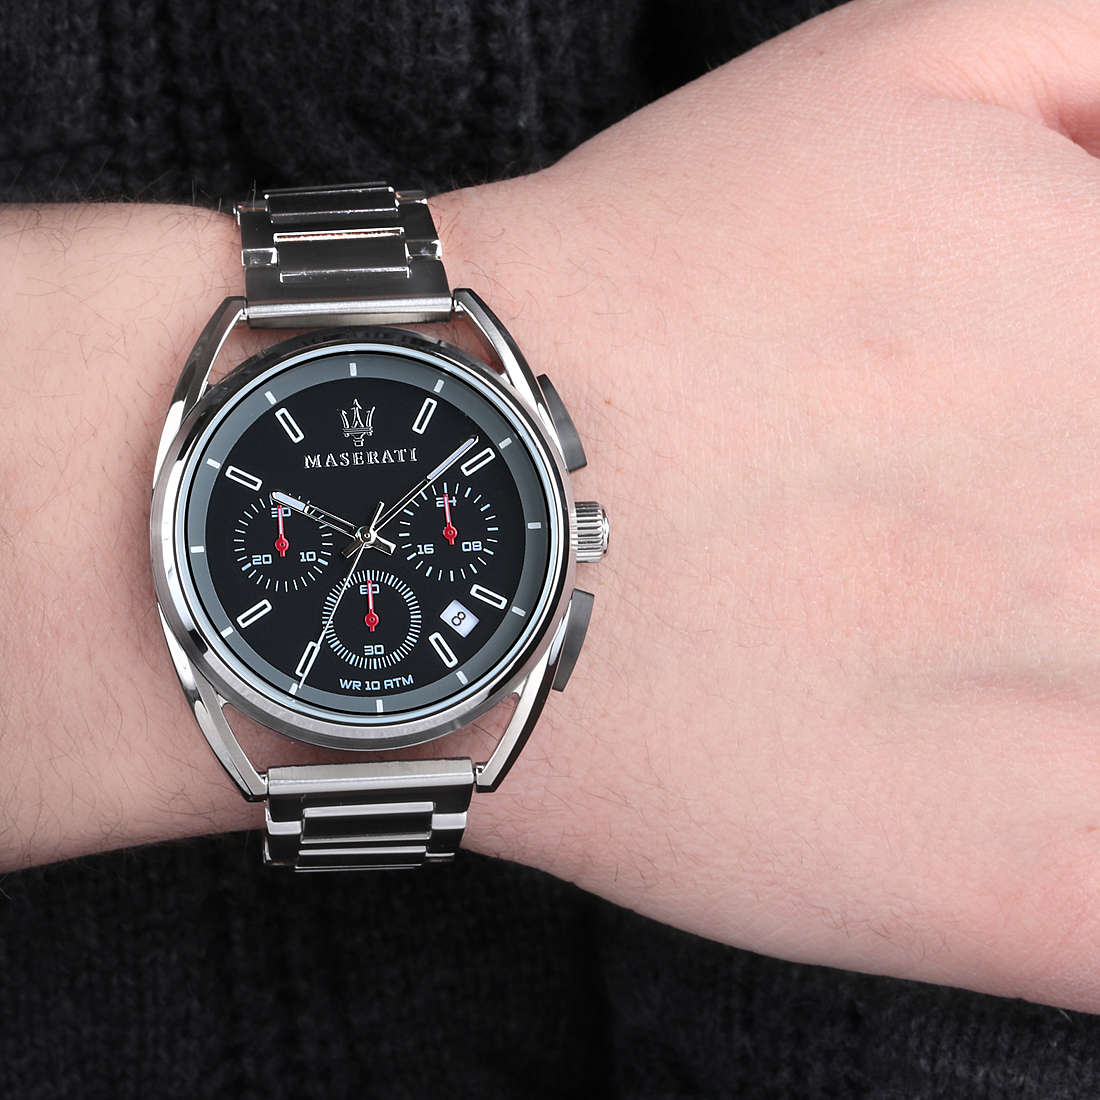 Maserati chronographs Trimarano man R8873632003 wearing